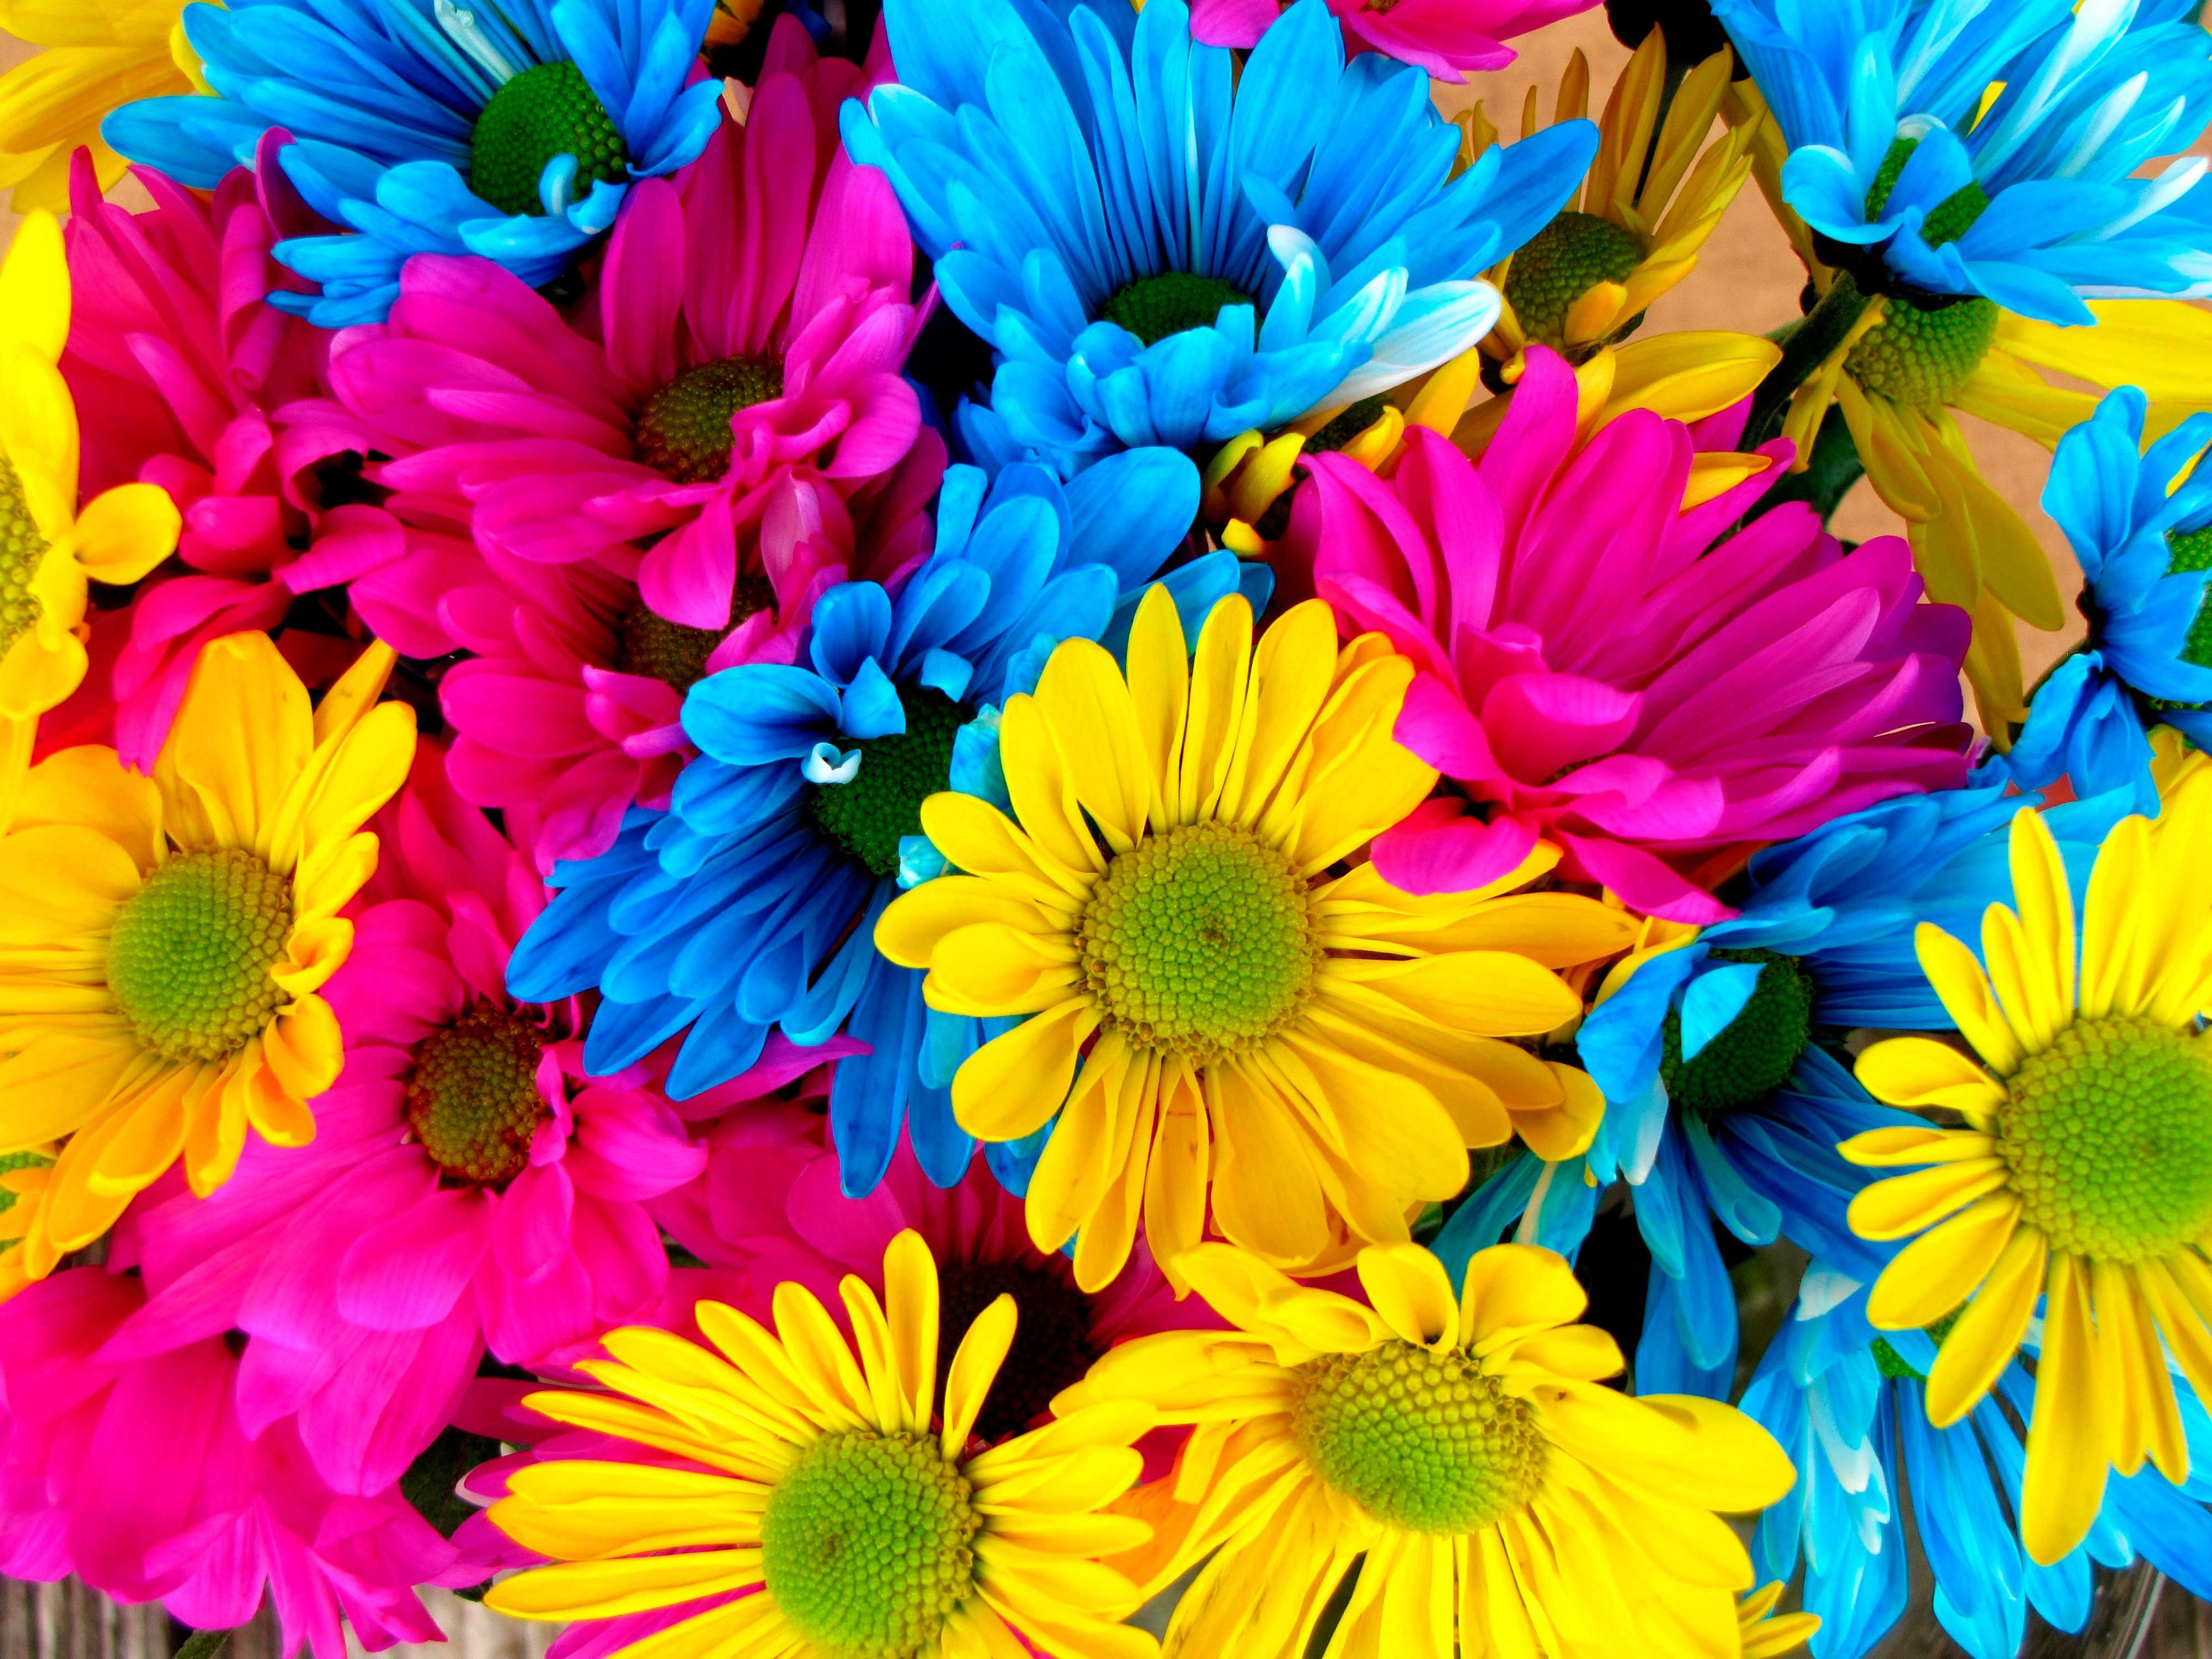 Fondos de pantalla de flores de colores - FondosMil